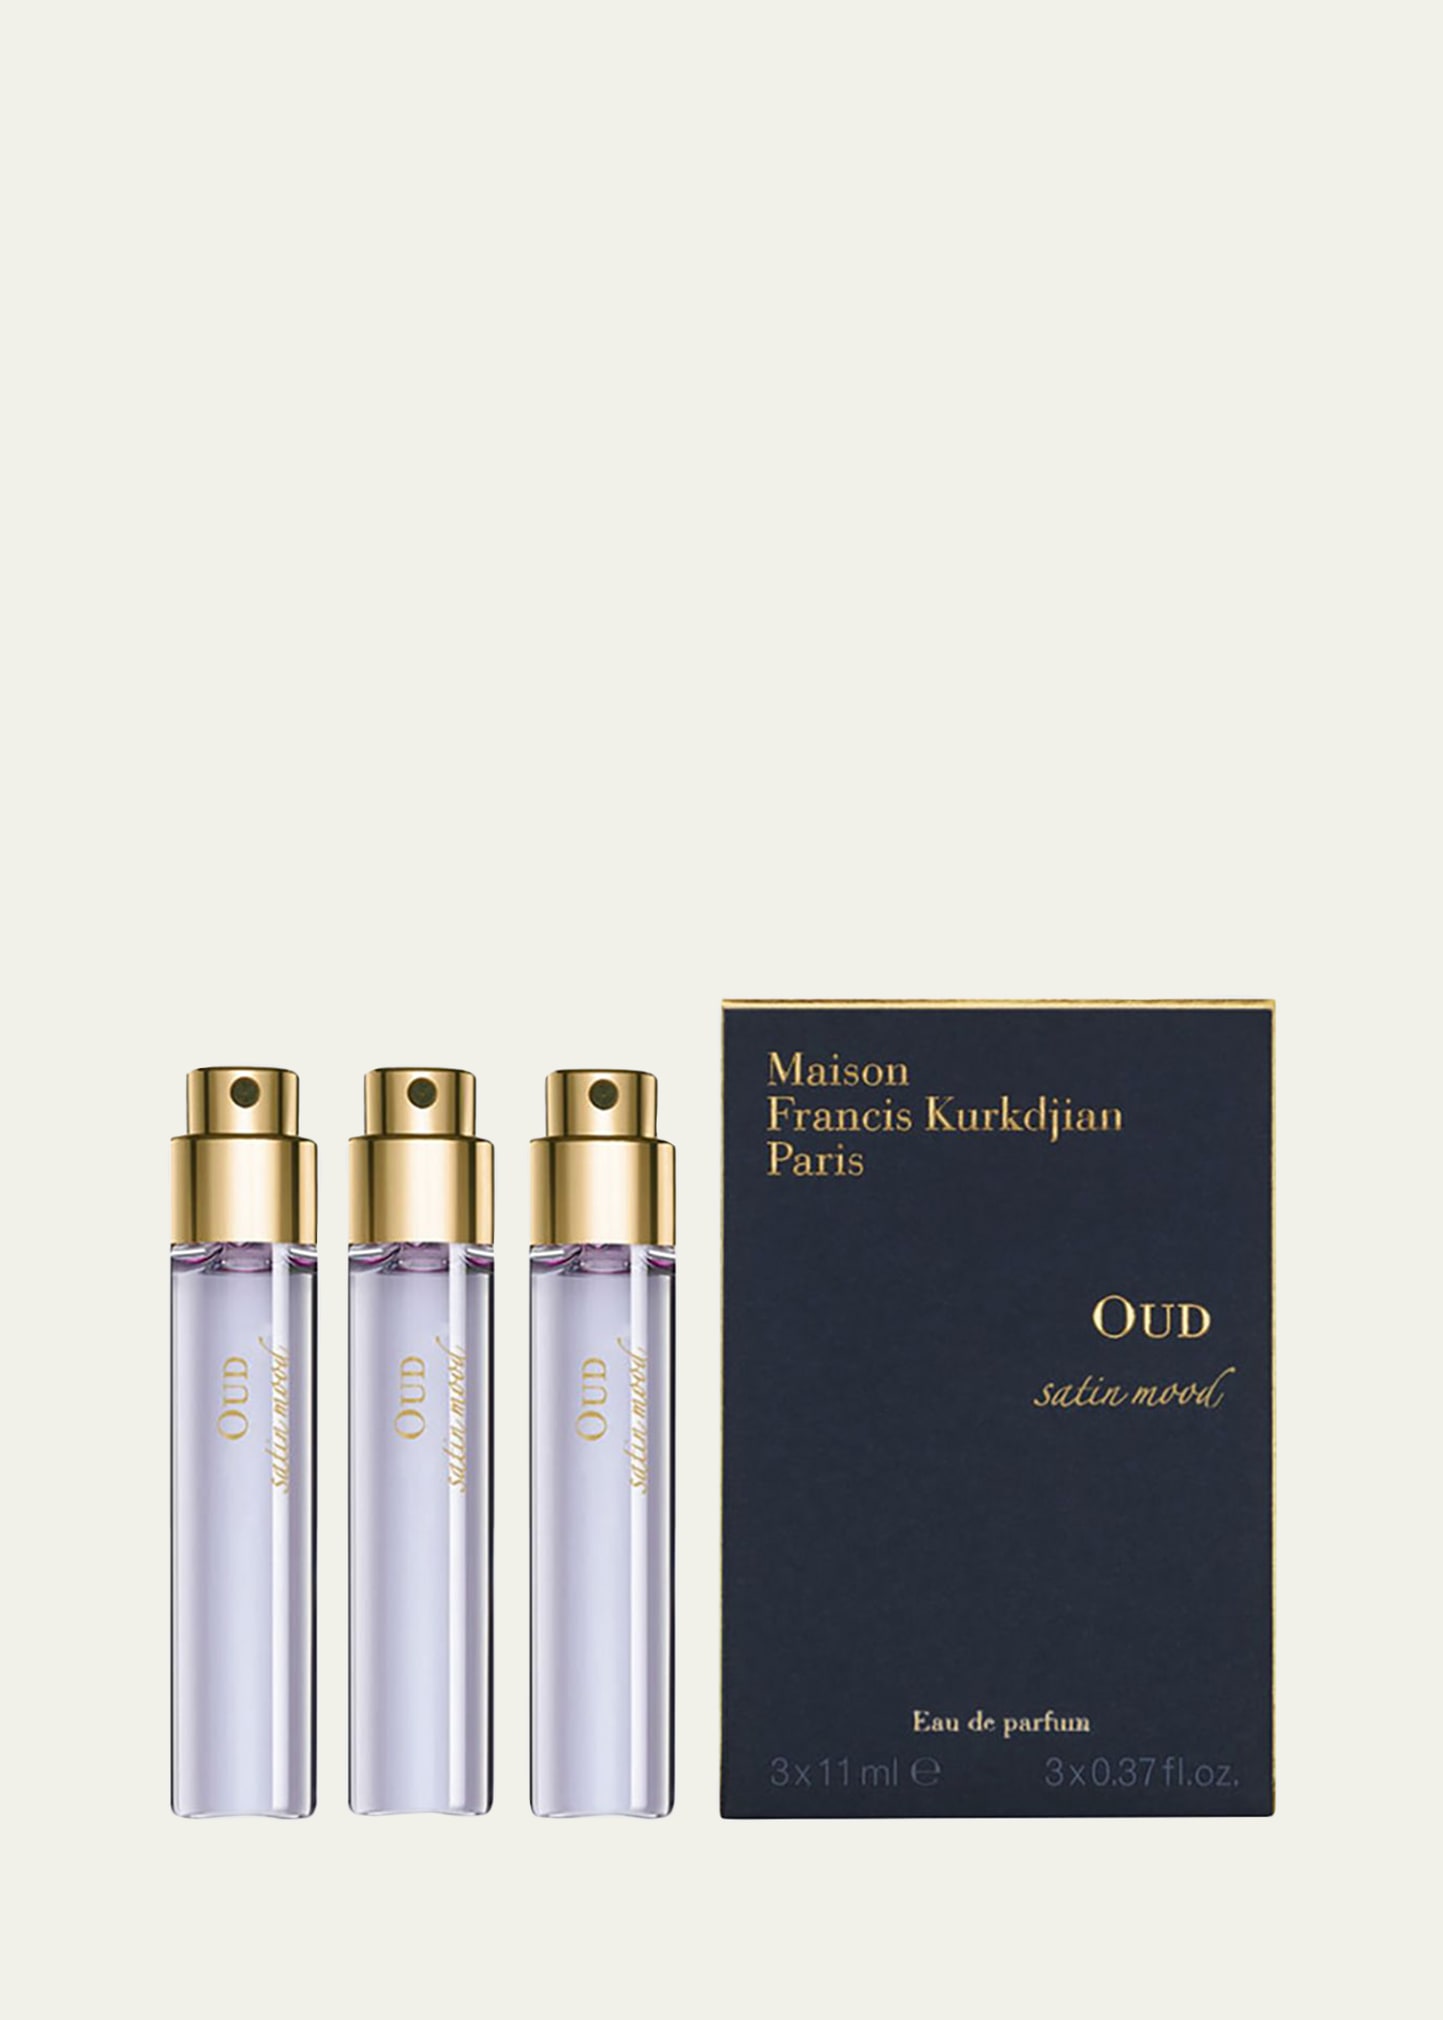 OUD satin mood Eau de Parfum Travel Spray Refills, 3 x 0.37 oz.